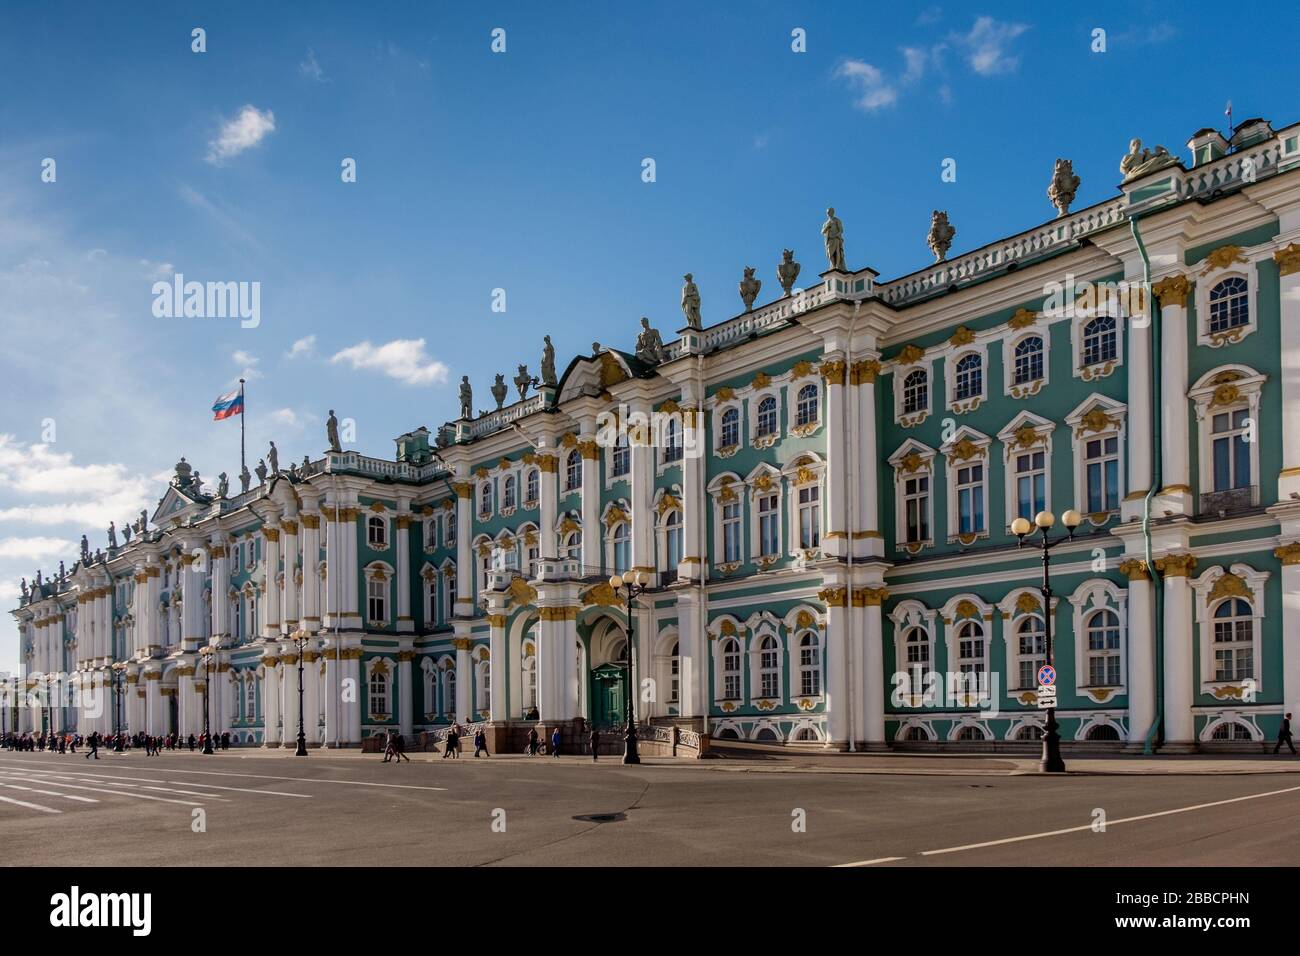 Petersburgs bekanntestes Gebäude, der Winterpalast, heute Teil des Kunstmuseums Hermitage. Sankt Petersburg Russland Stockfoto